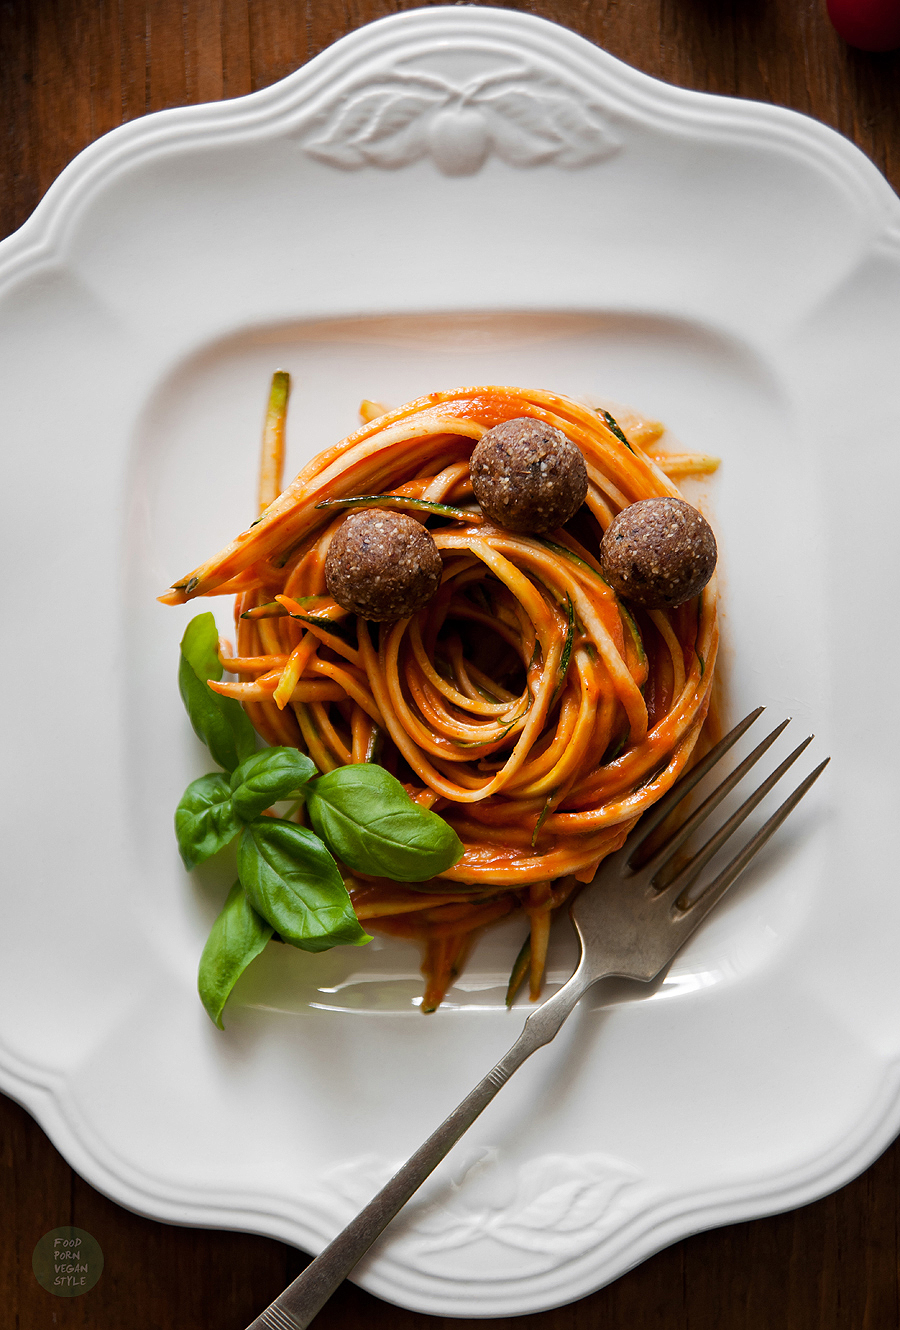 Raw zucchini spaghetti with "meatballs" and a tomato-pepper sauce